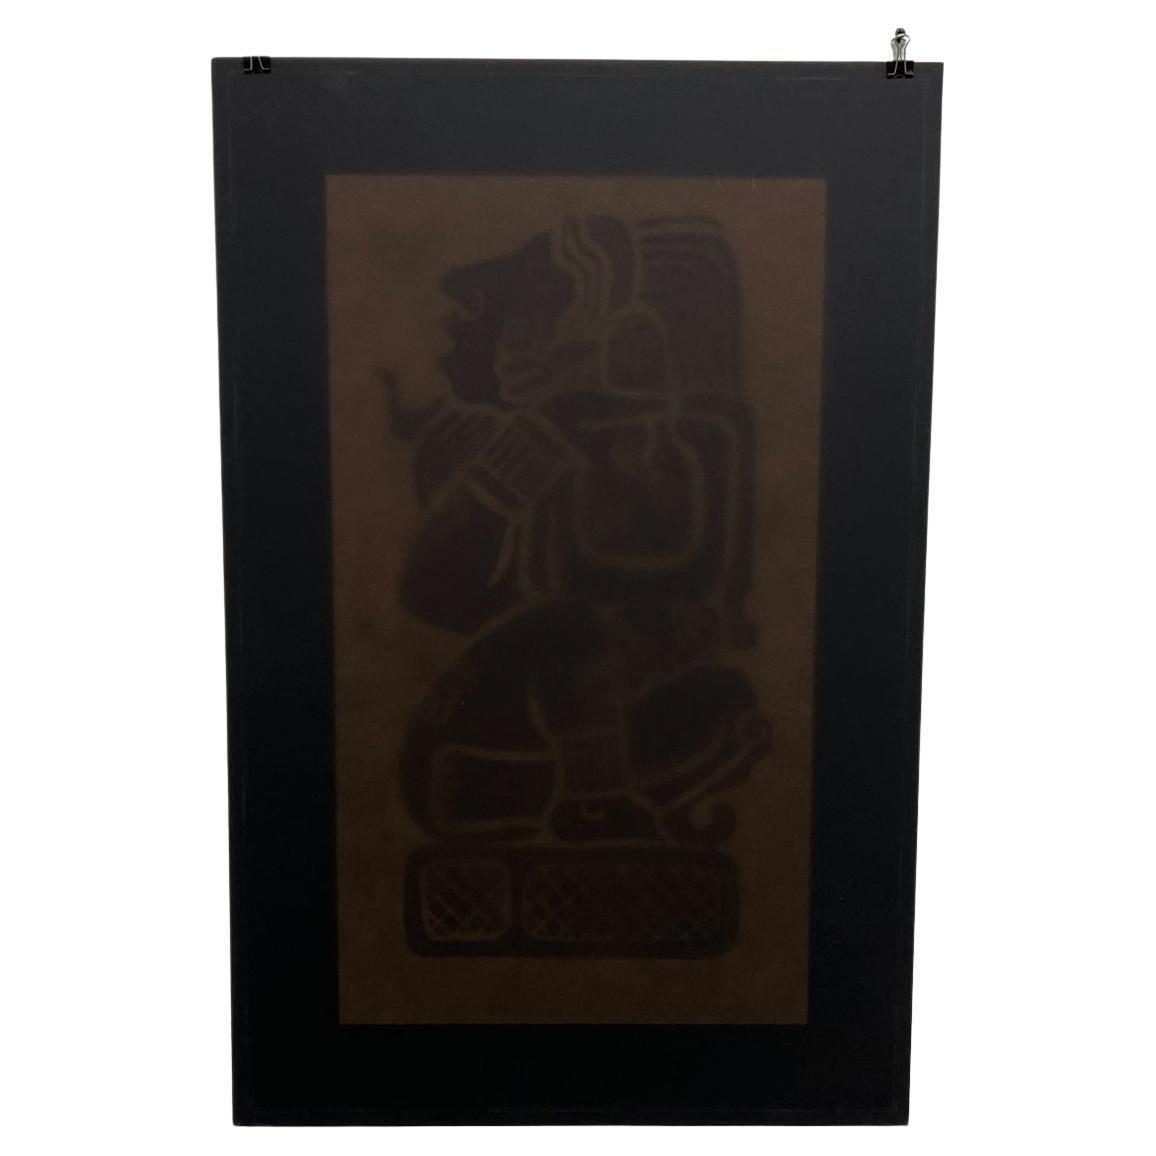 Intricate Mayan Revival Art Vintage Black Photograph Poster